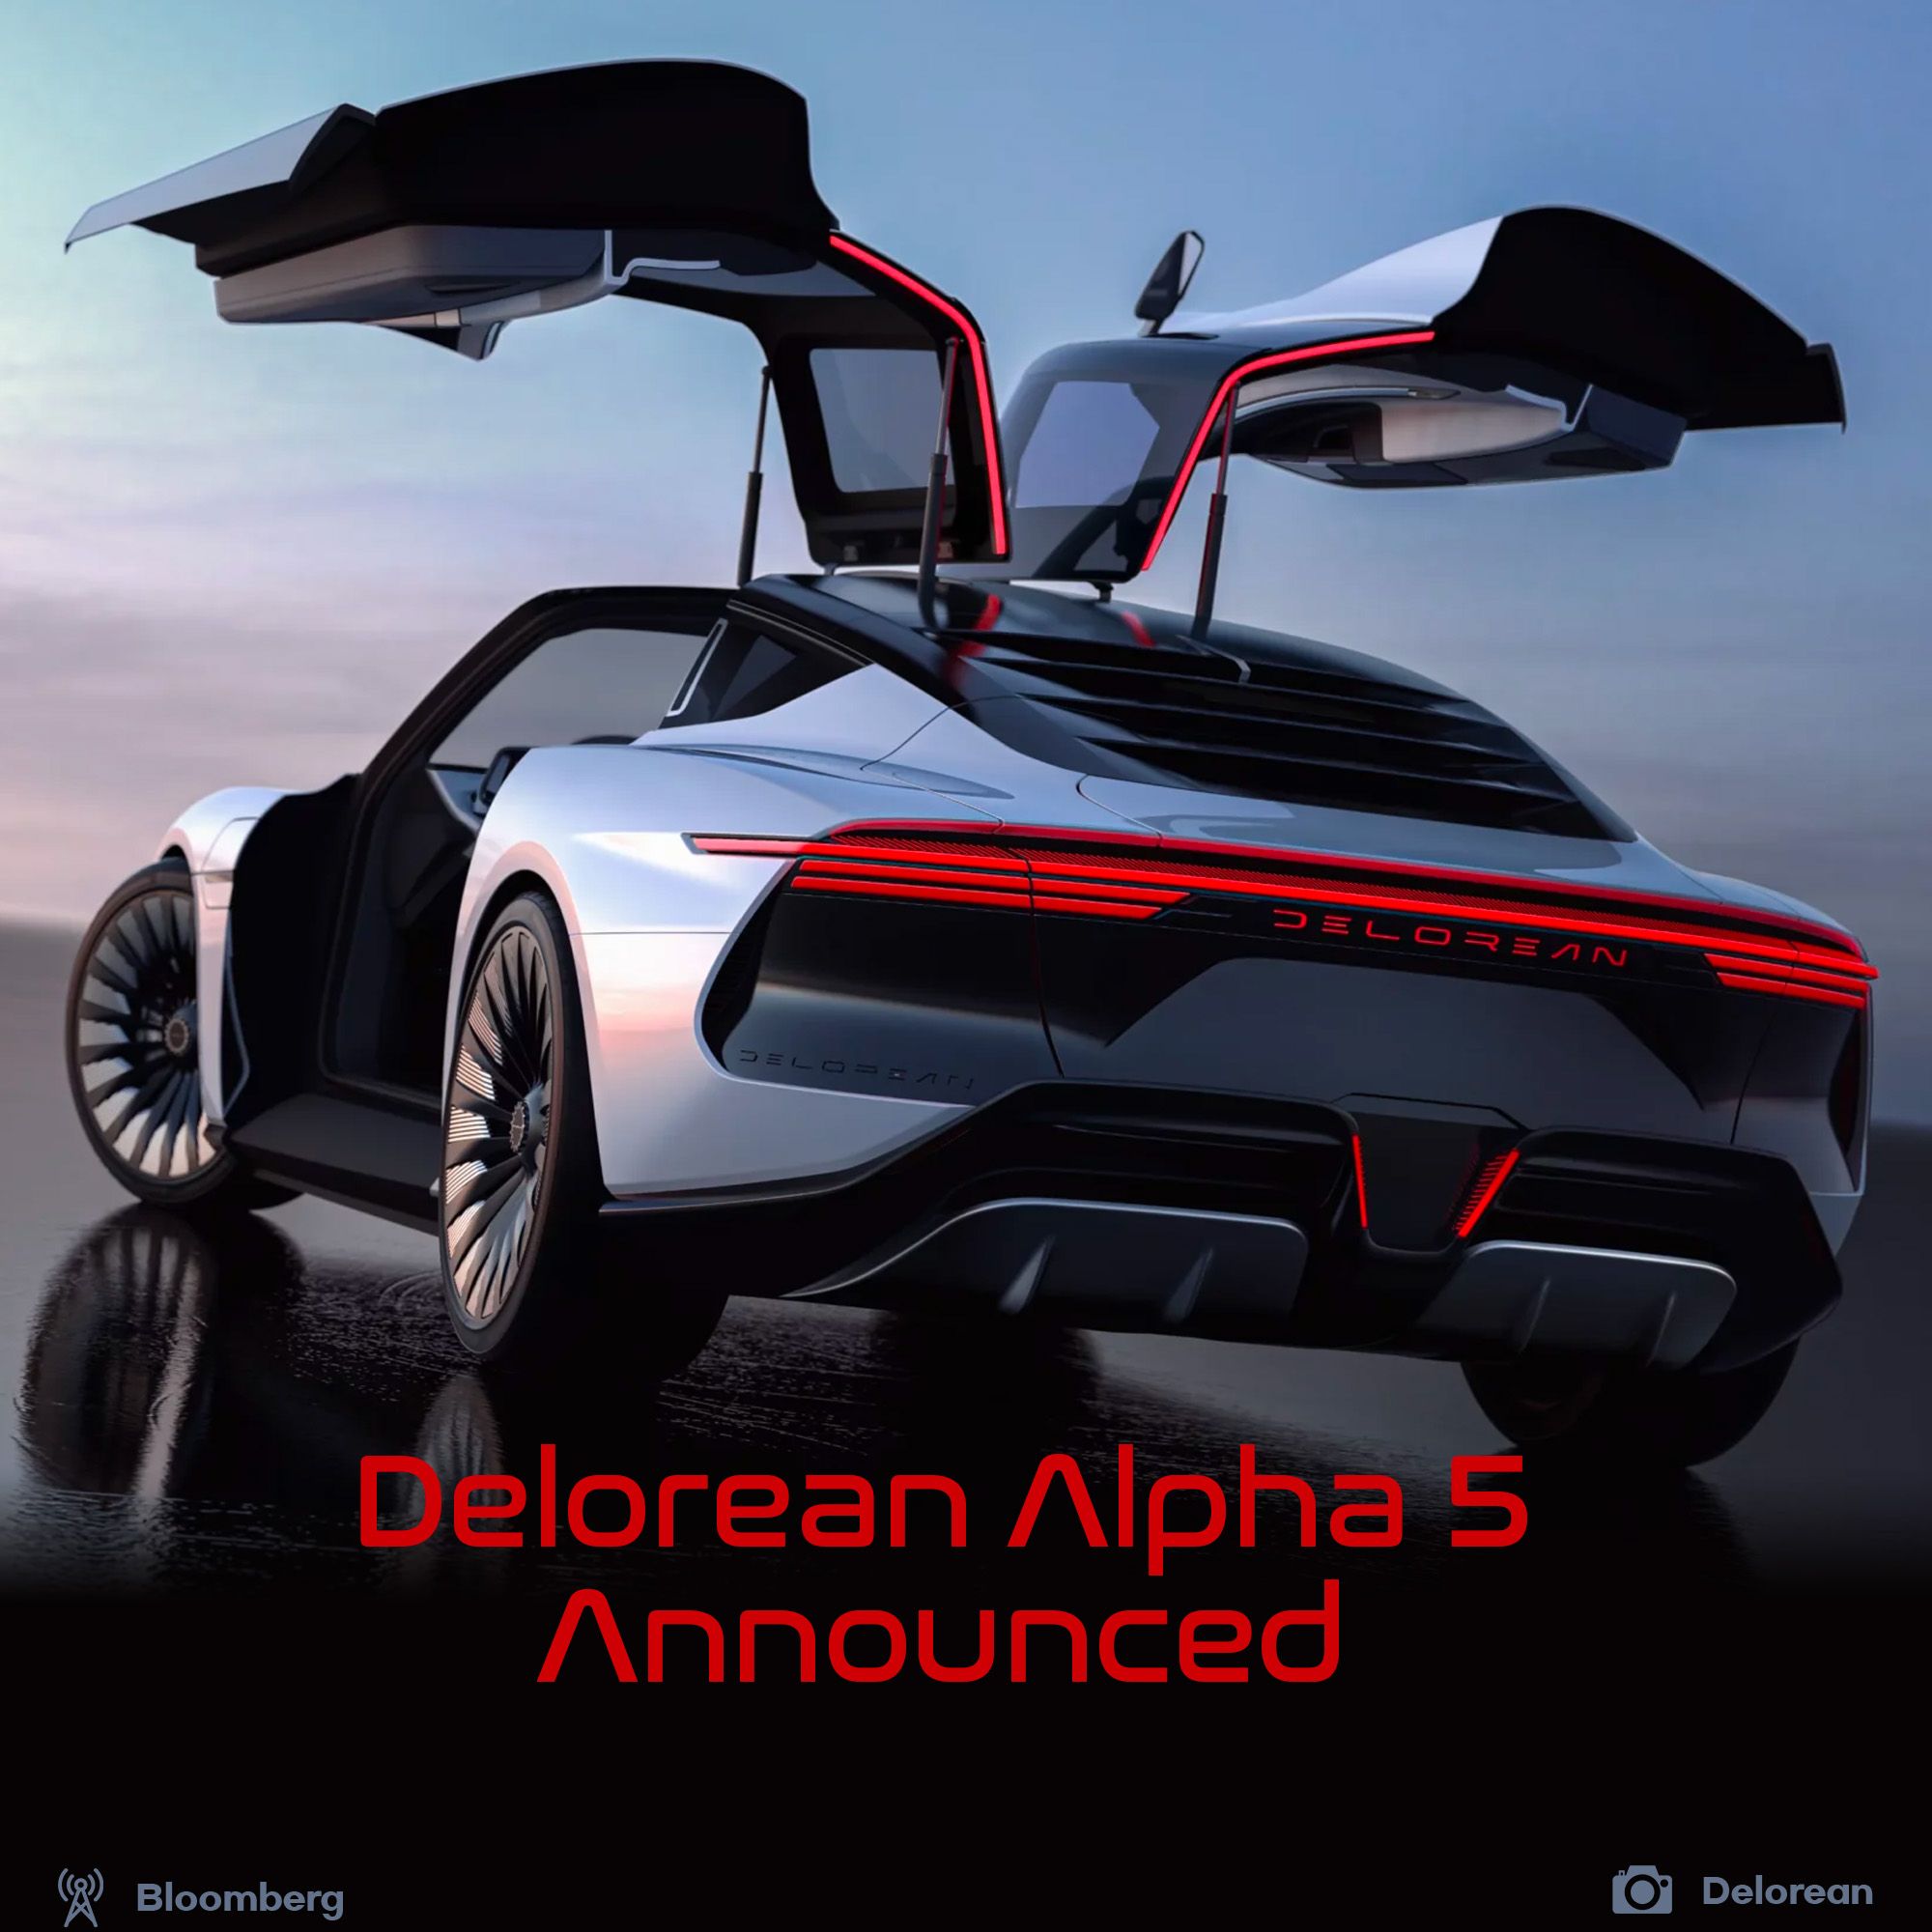 Delorean Alpha 5 announced